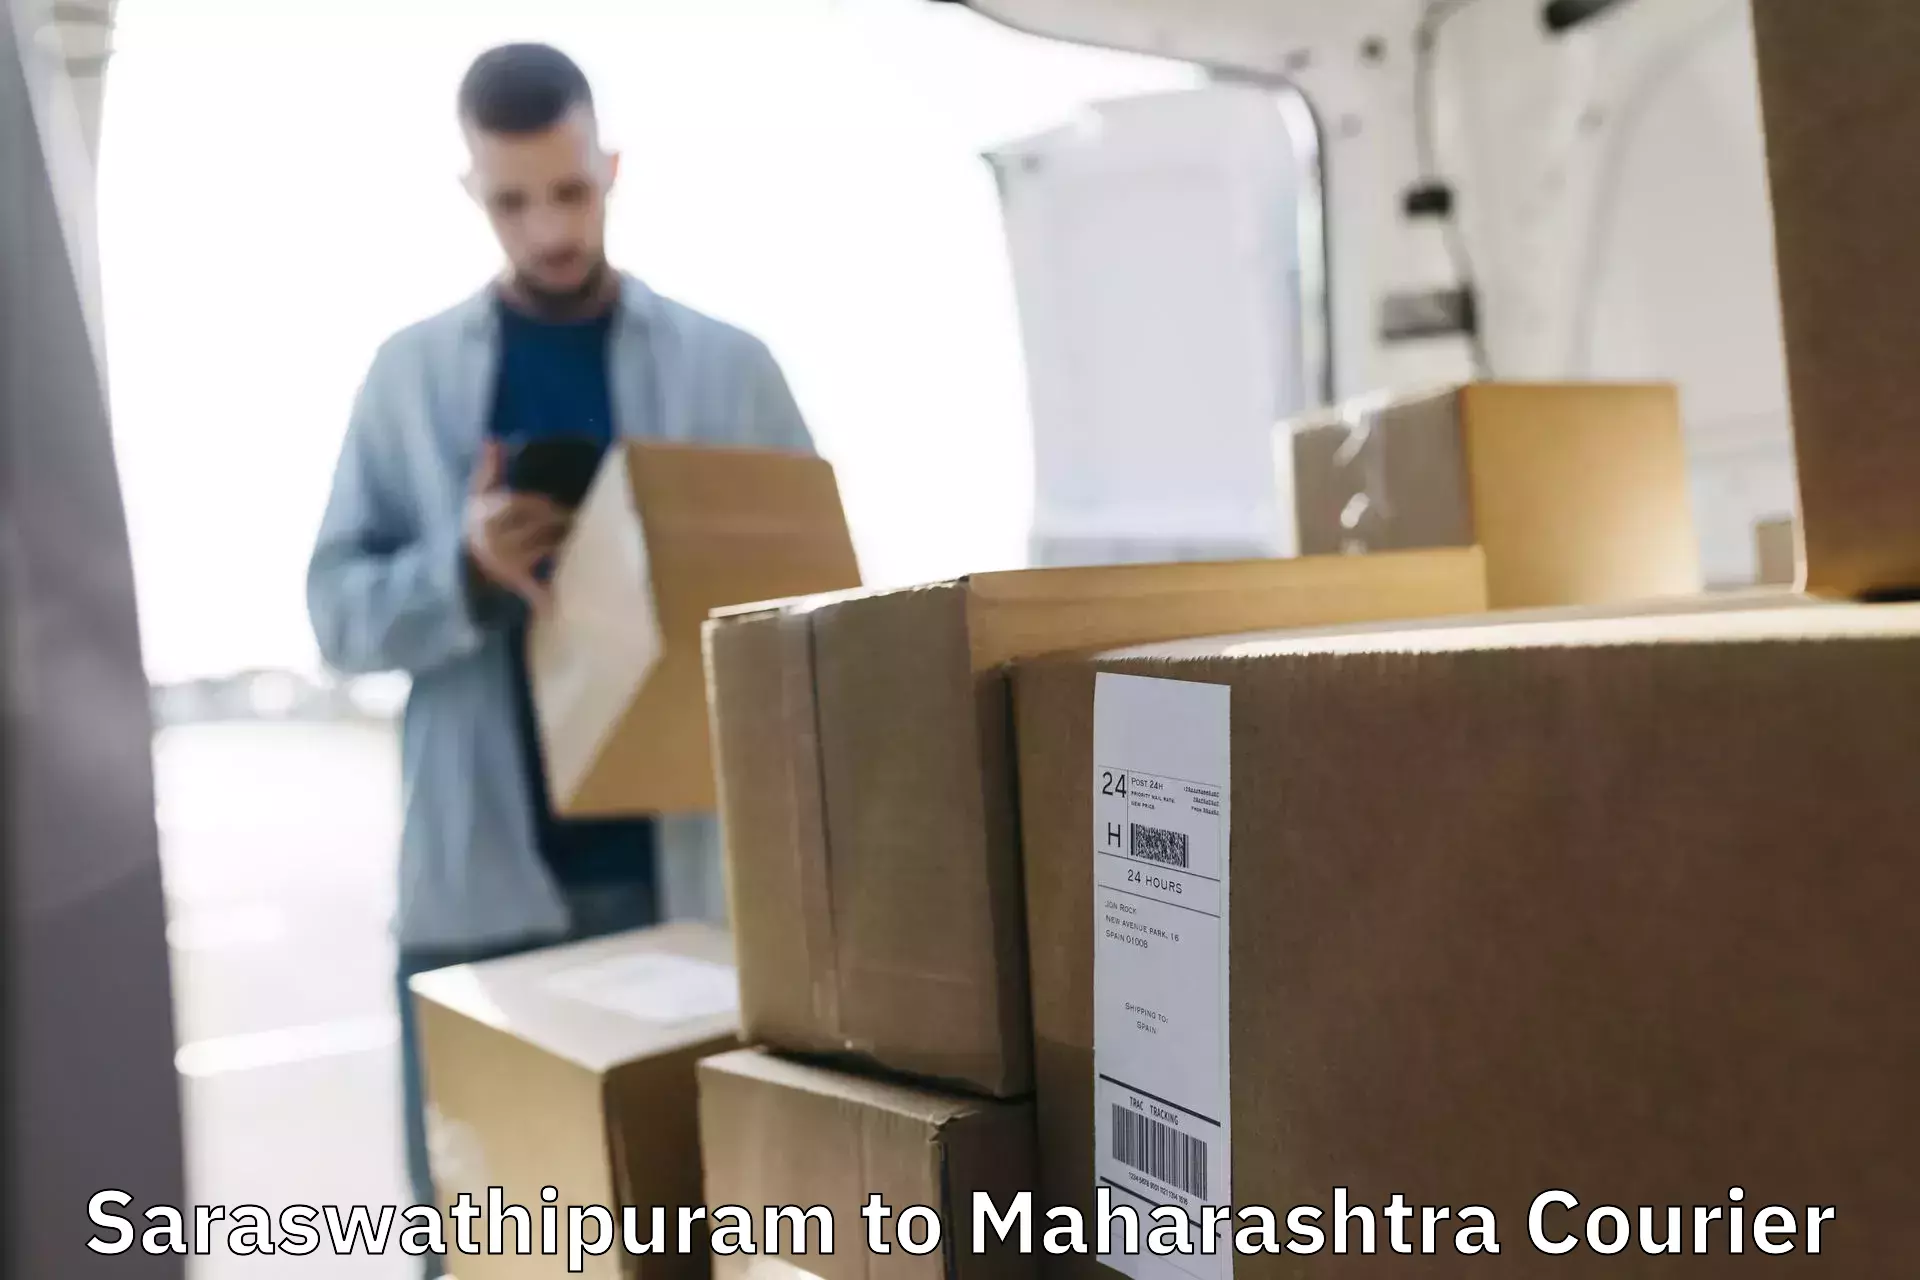 On-demand delivery Saraswathipuram to Khandala Pune